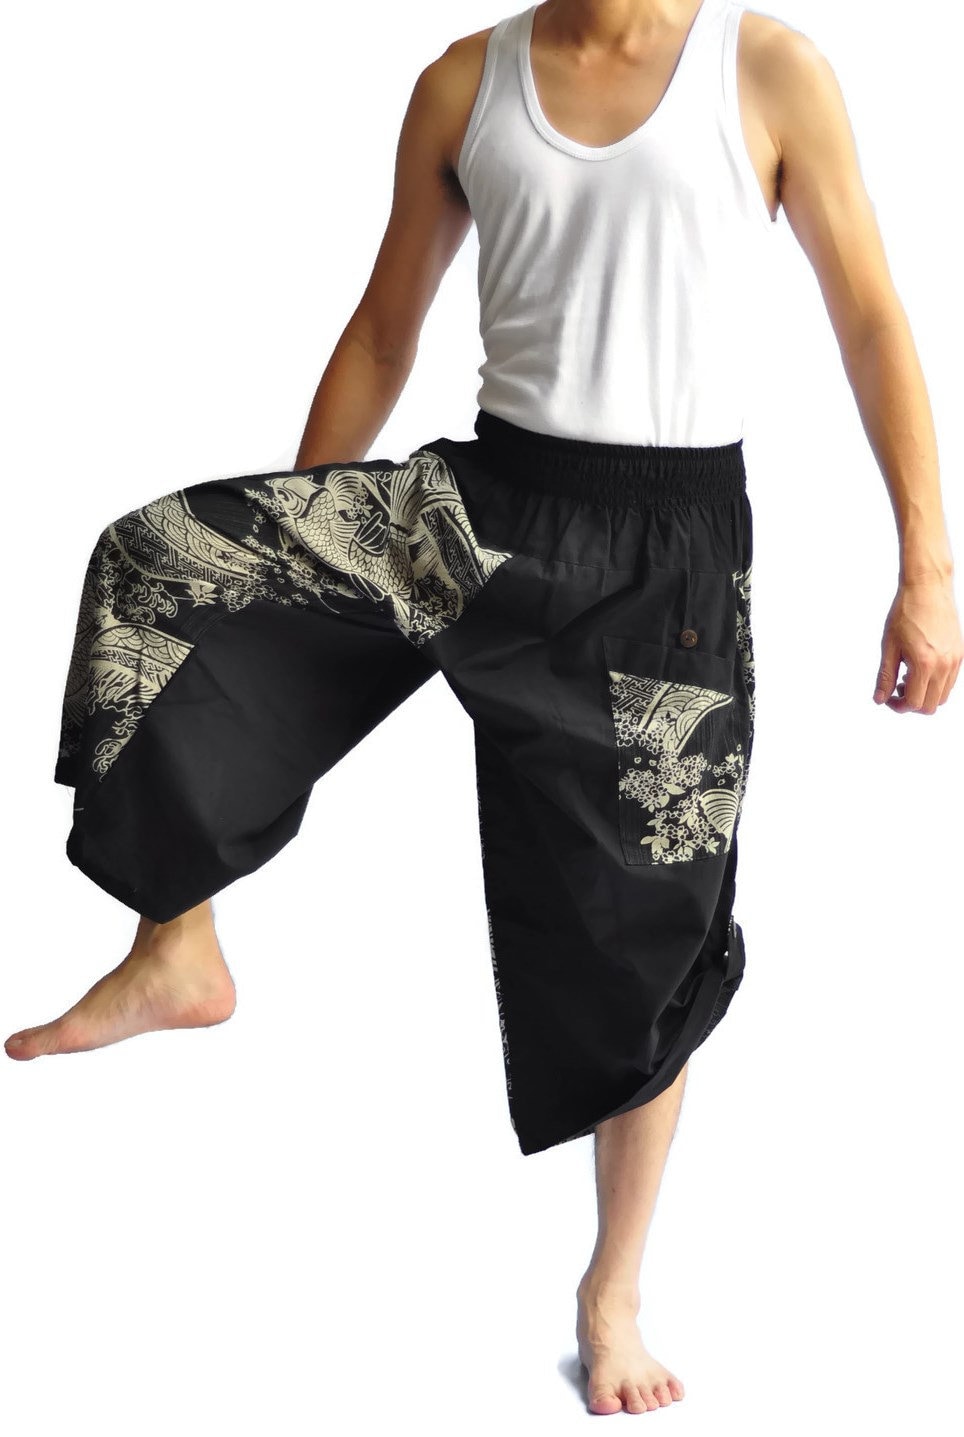 Fuumiol Men’s Patchwork Shorts Casual Drawstring Linen Short Summer Loose Harem Capri Yoga Pants Beach Long Shorts 